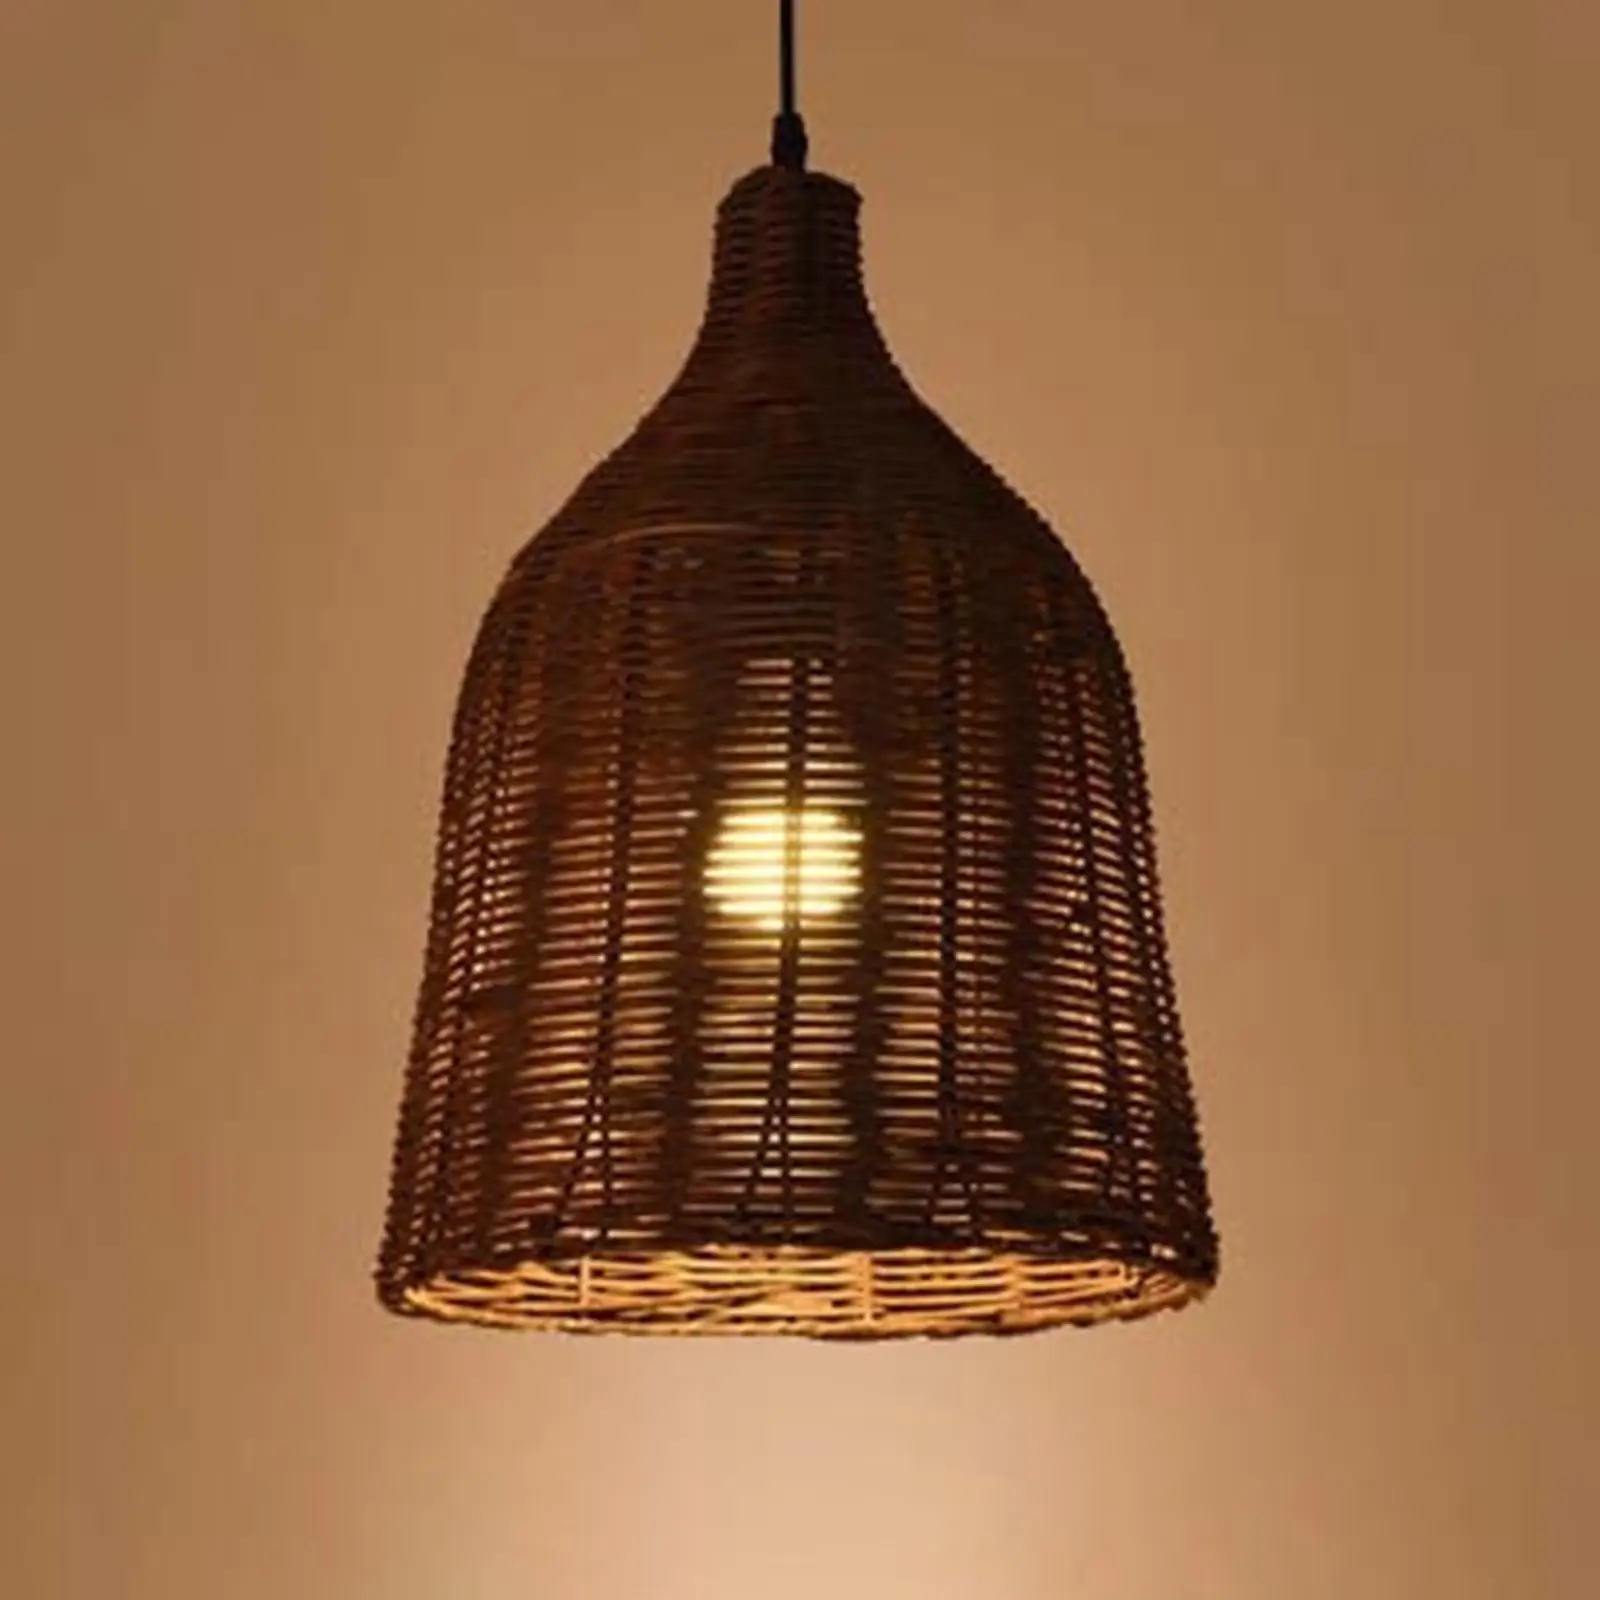 Creative Bamboo Pendant Light Fixture E27 Handmade Woven Lamp Shade Bamboo Light Fixture for Farmhouse Bar Cafe Living Room